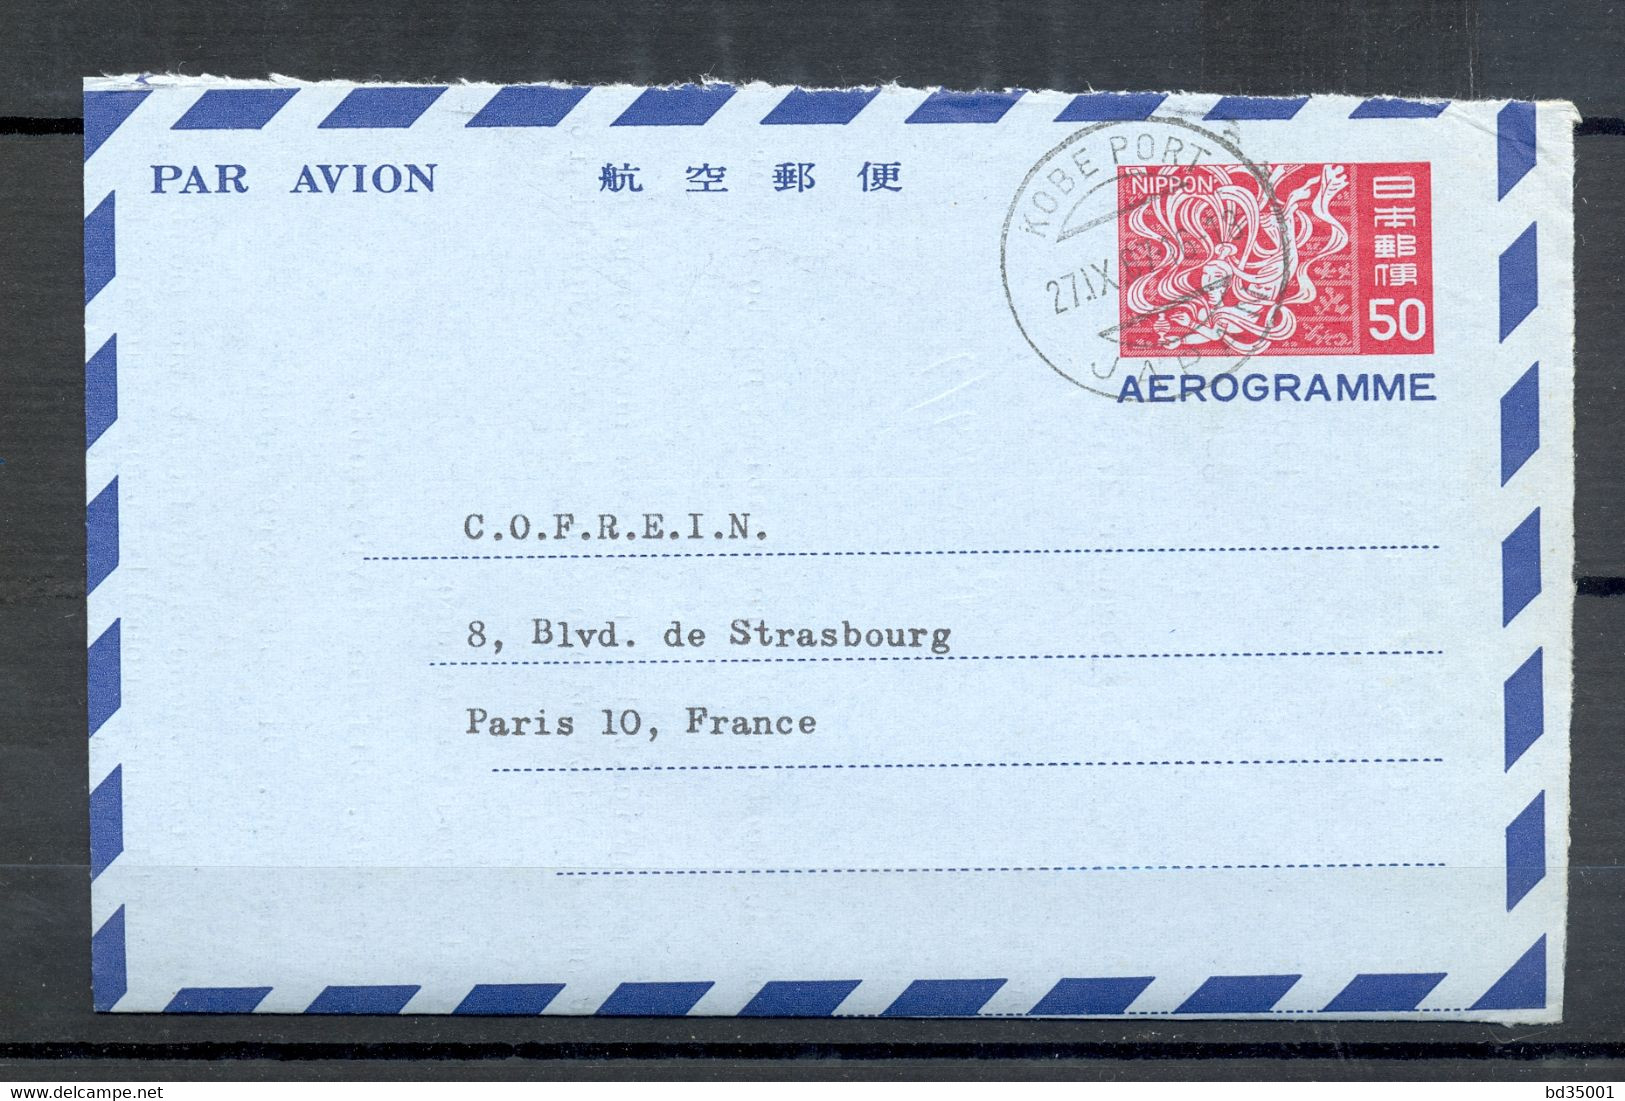 AEROGRAMME - AIR LETTER - JAPON - JAPON - 1967 - KOBE PORT VERS PARIS - (6) - Aerogrammi